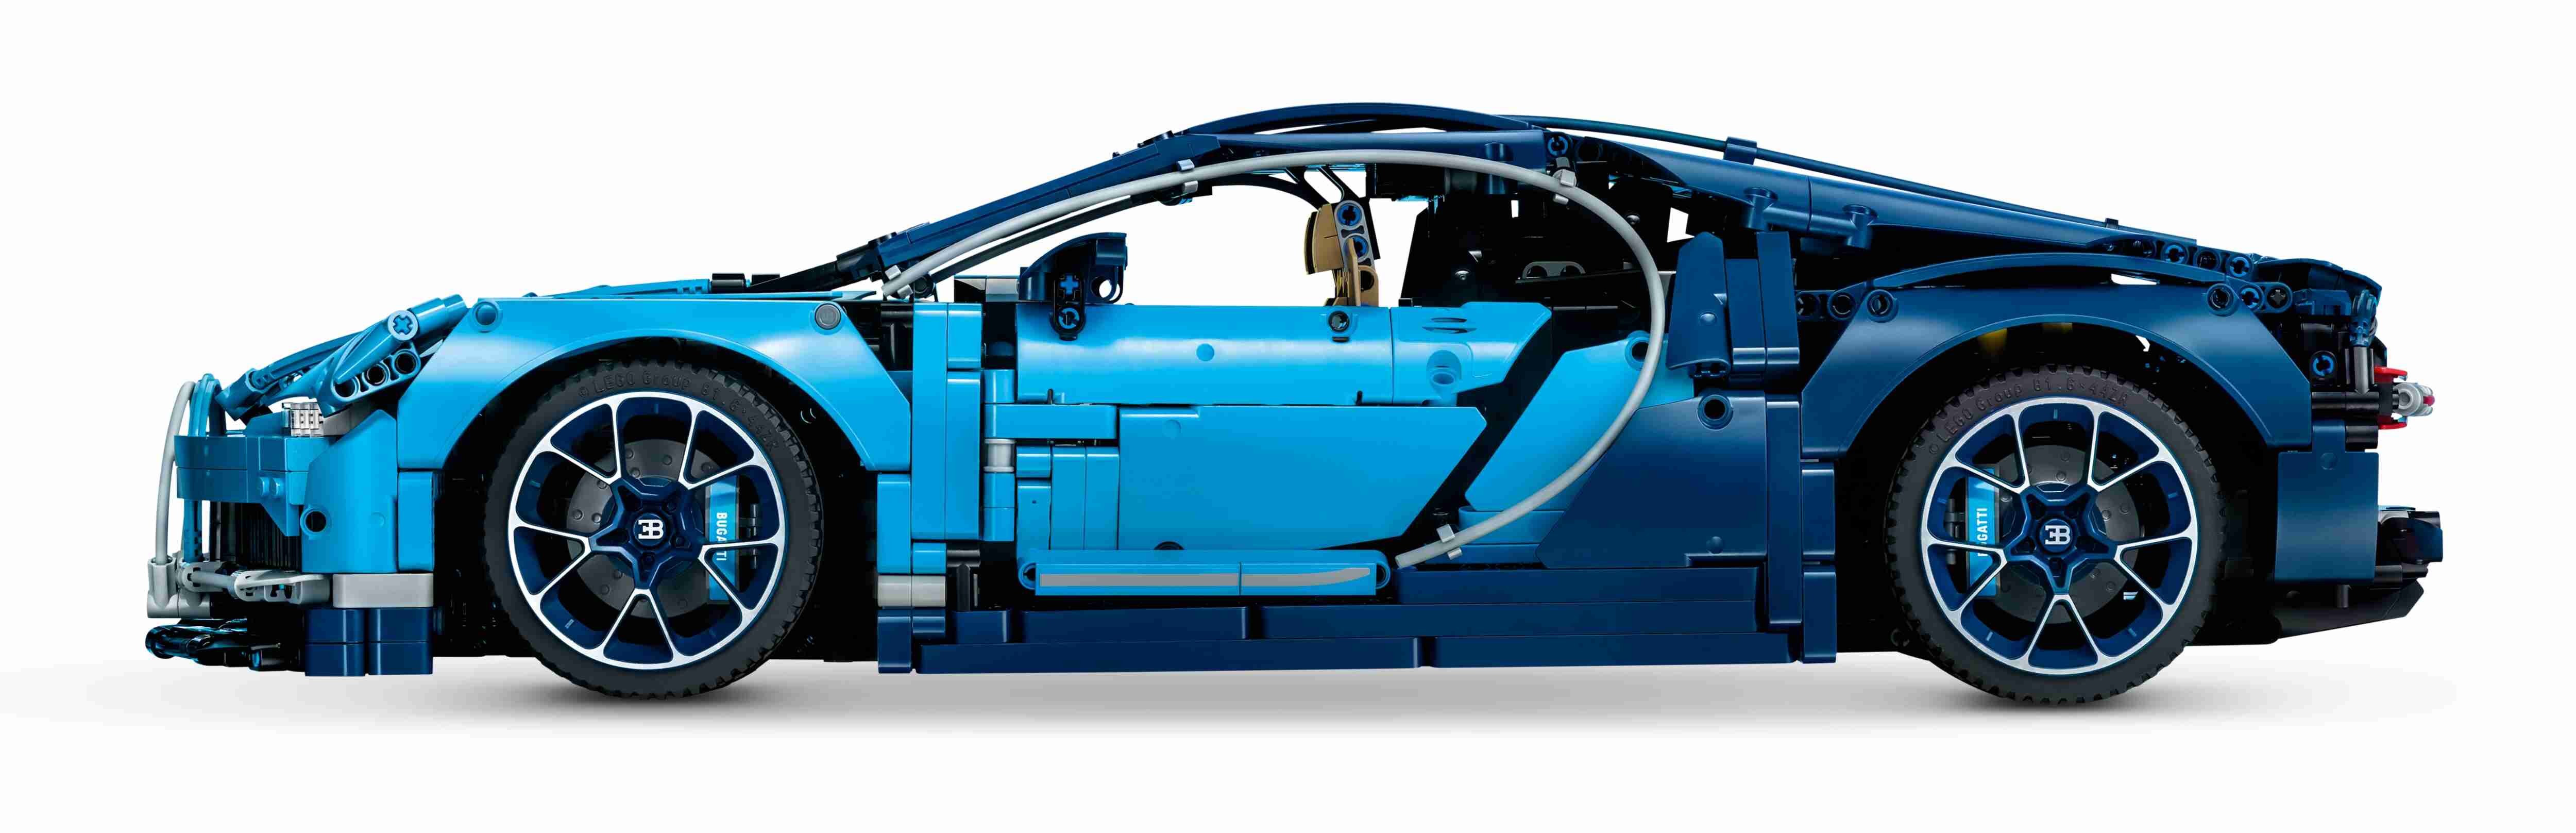 LEGO 42083 Technic Bugatti Chiron, Supersportwagen,